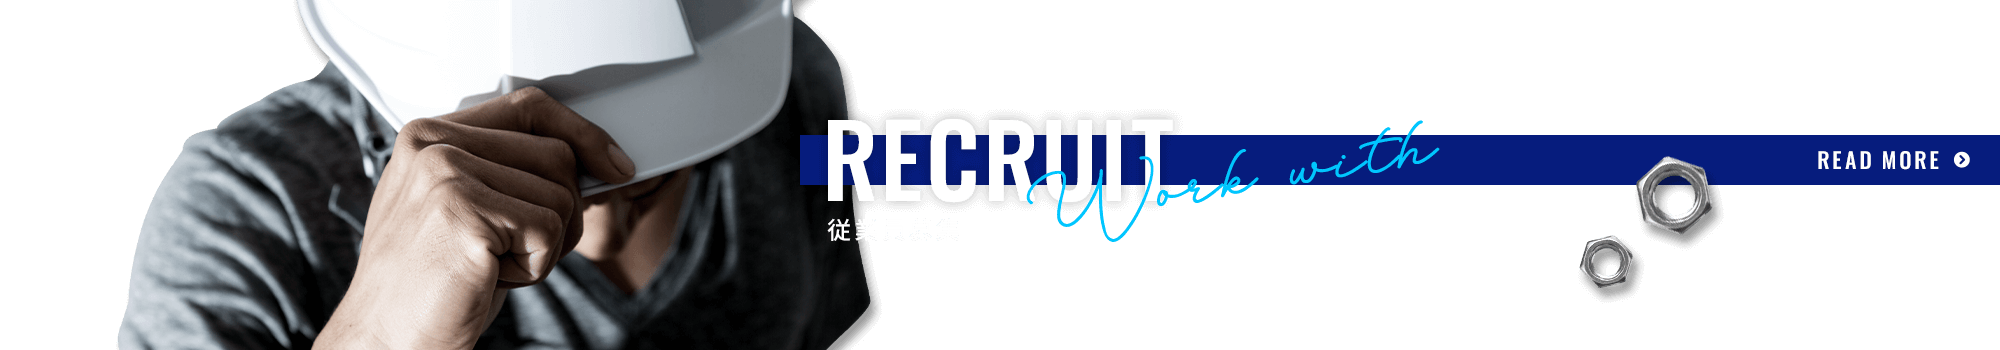 banner_recruit_cover